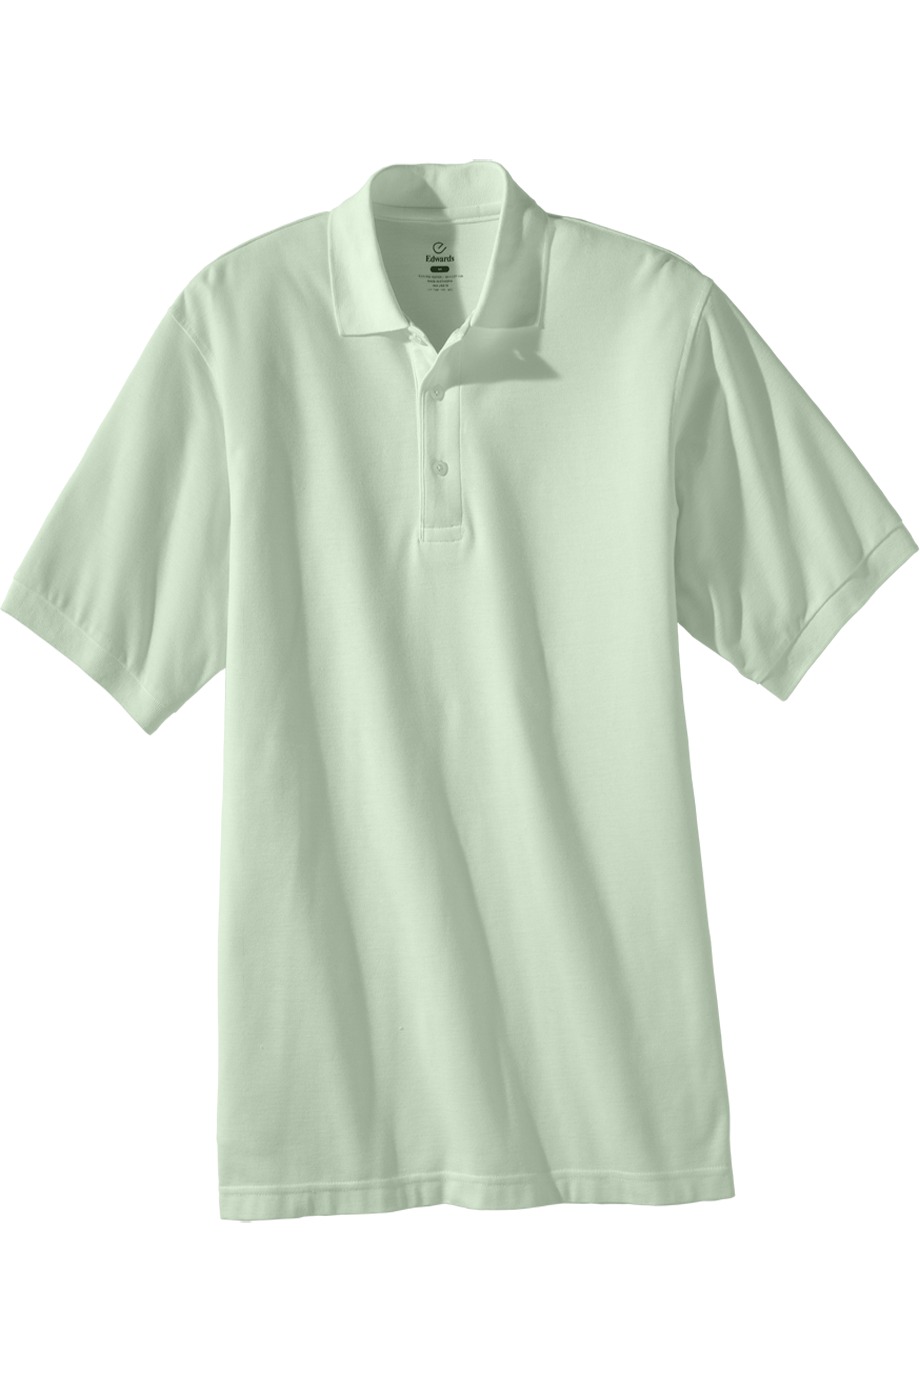 Edwards Garment 1500 - Men's Short Sleeve Soft Touch Blended Pique Polo